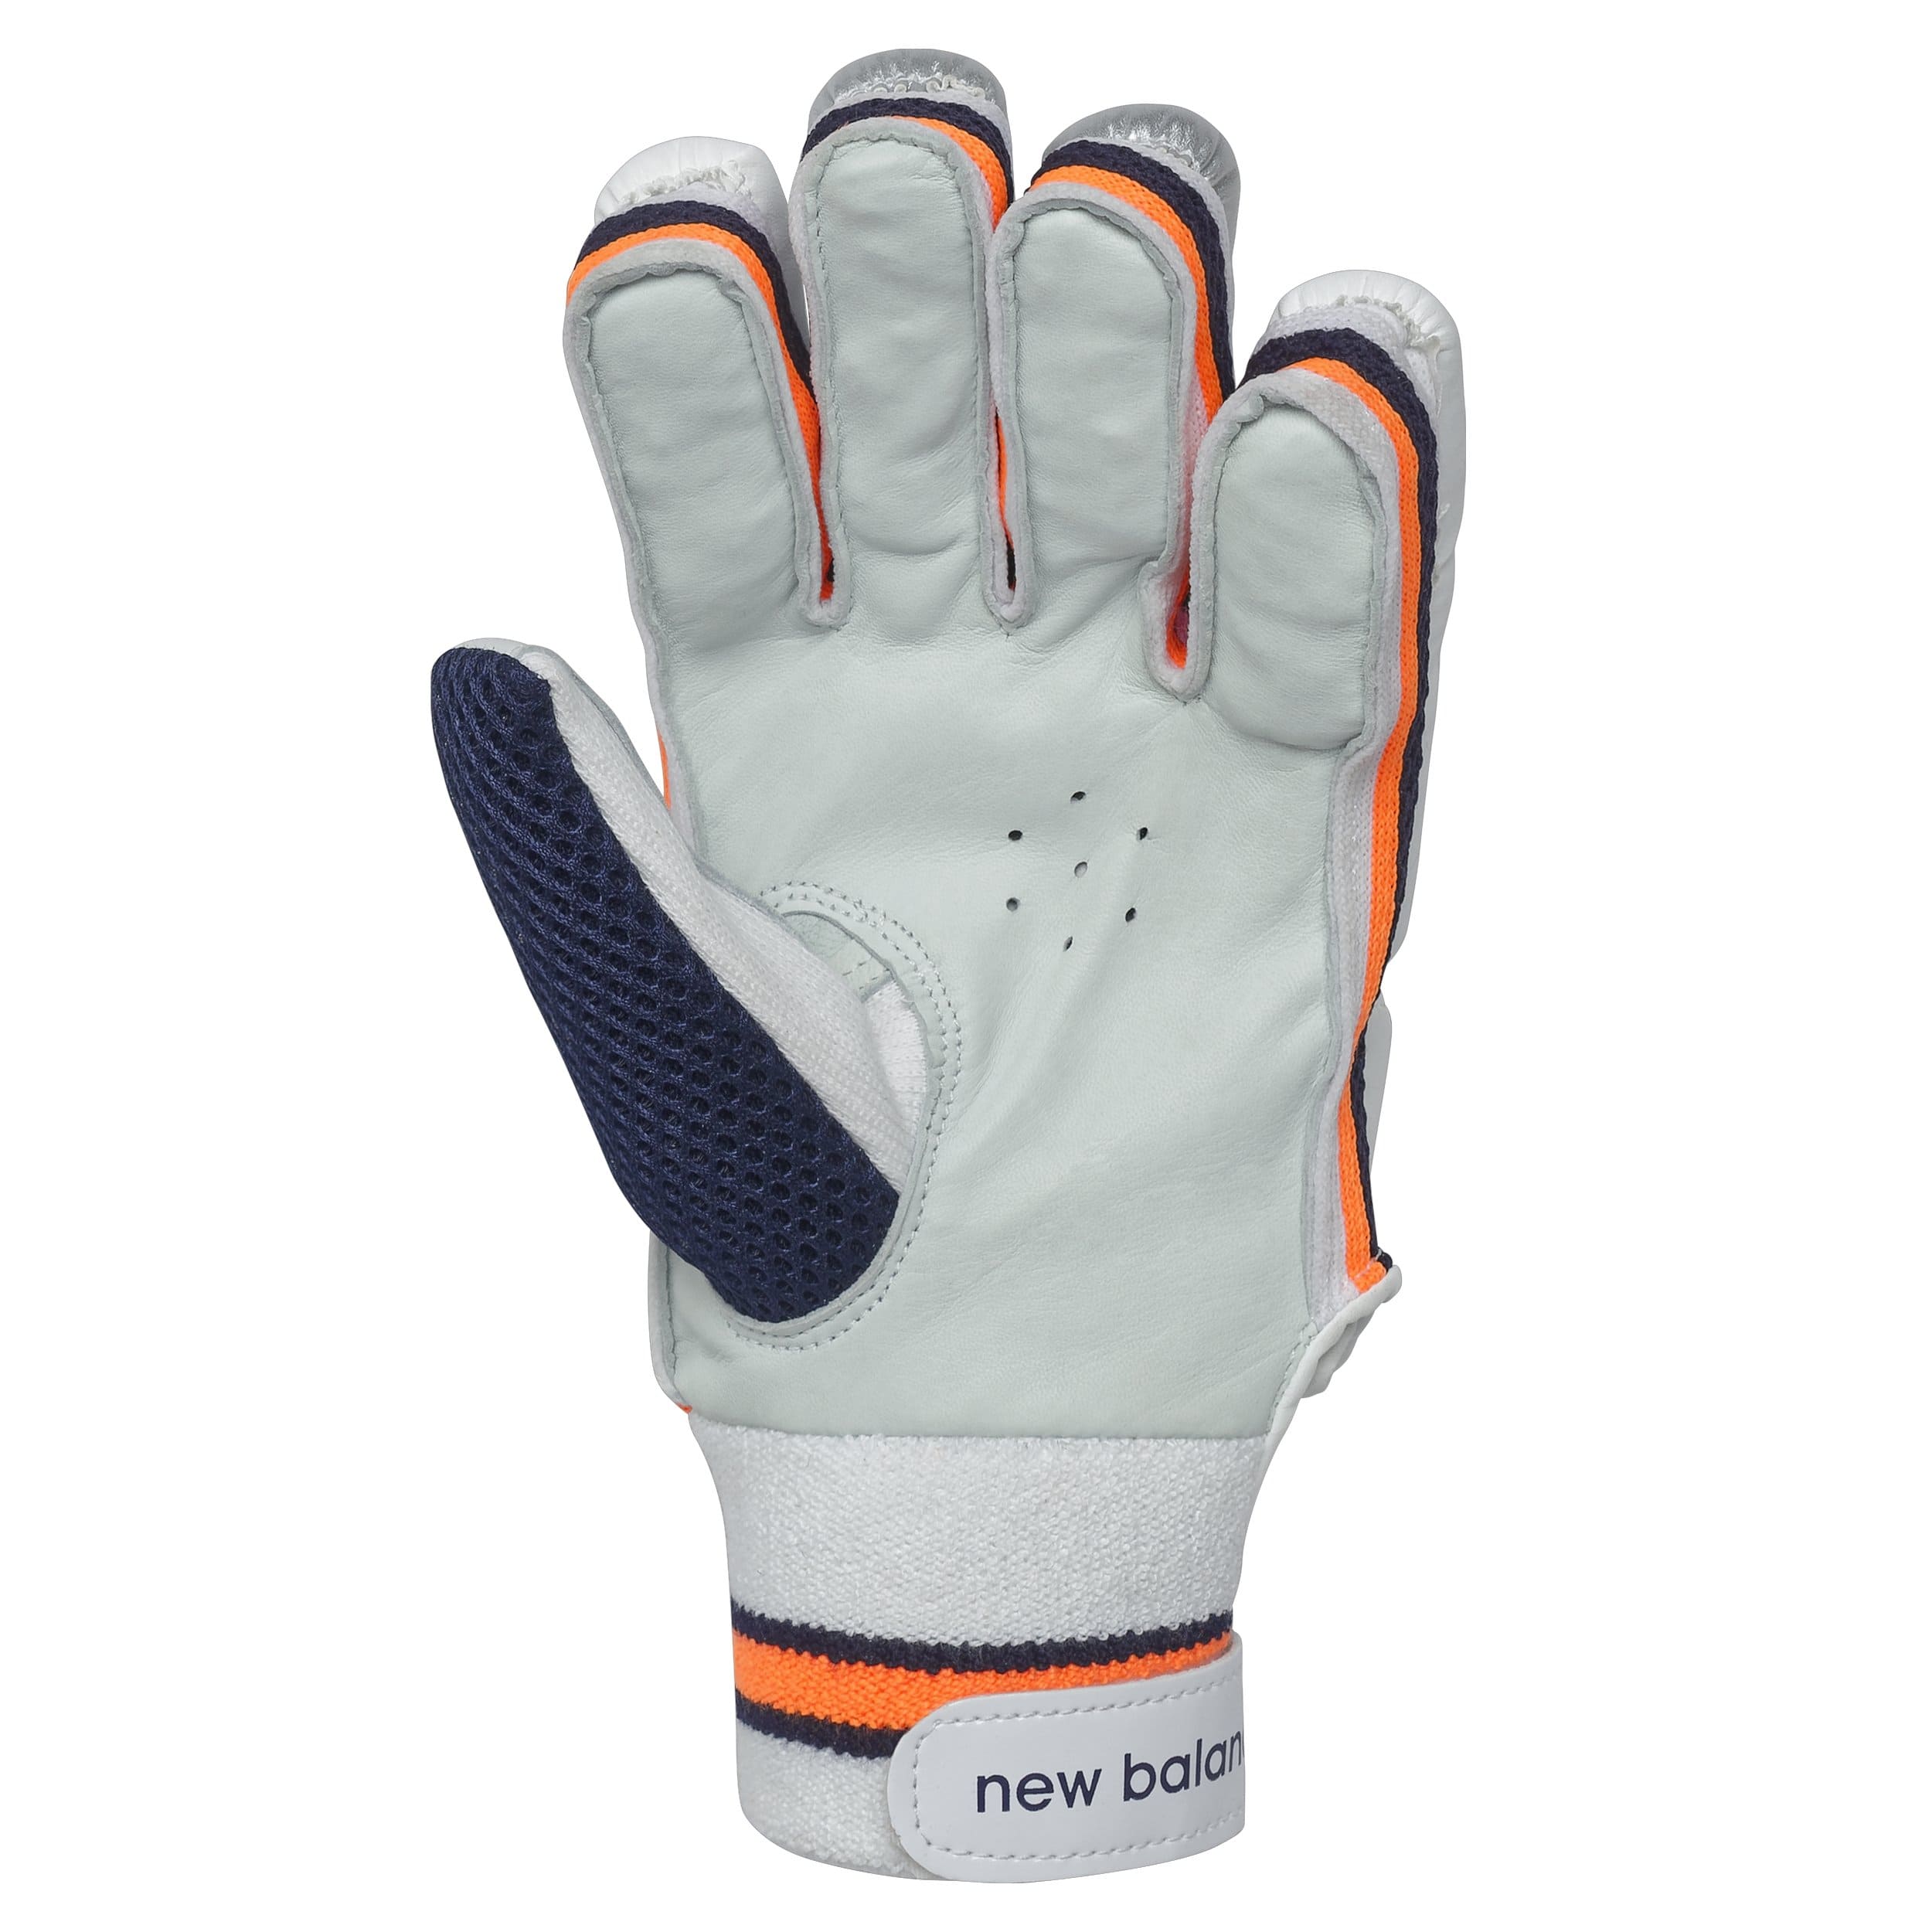 New Balance Gloves New Balance DC380 Cricket Batting Gloves